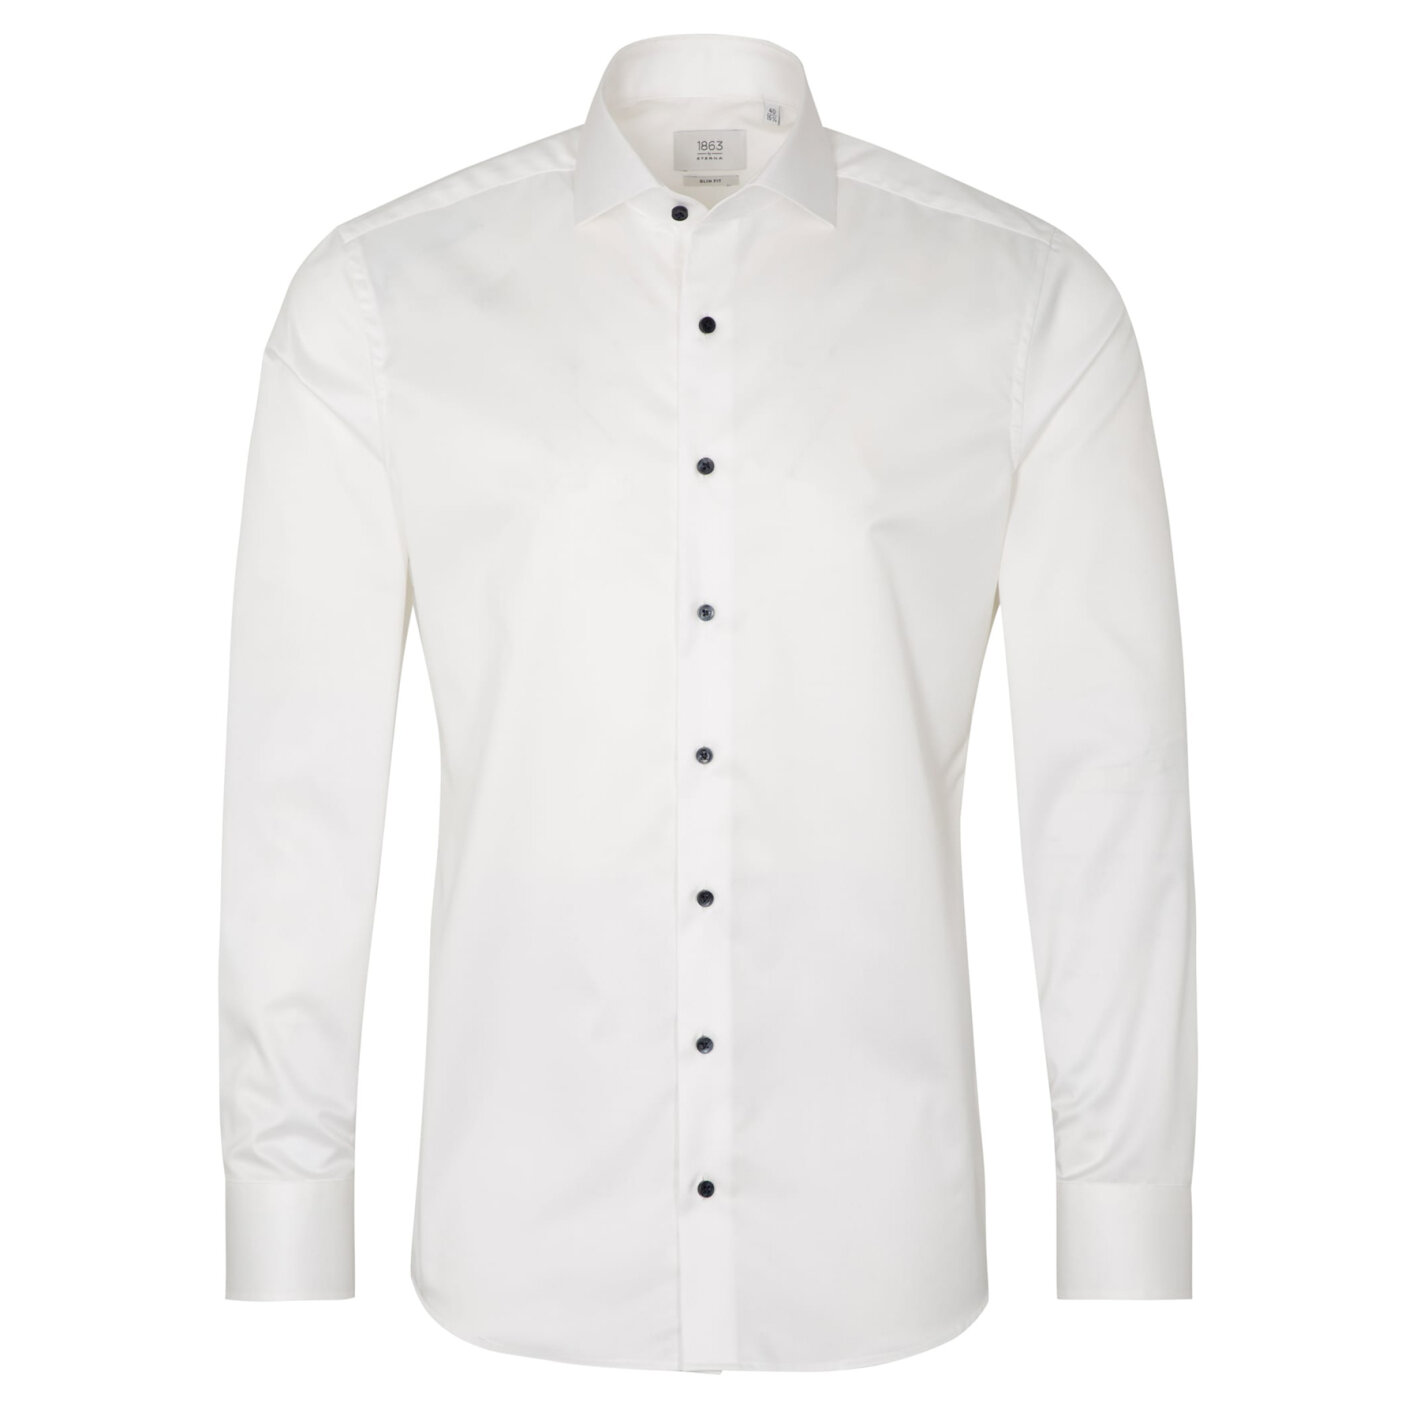 angivet Ombord Arv Eterna 8221 Hvid Galla skjorte i Slim fit - Levering 1-2 hverdage